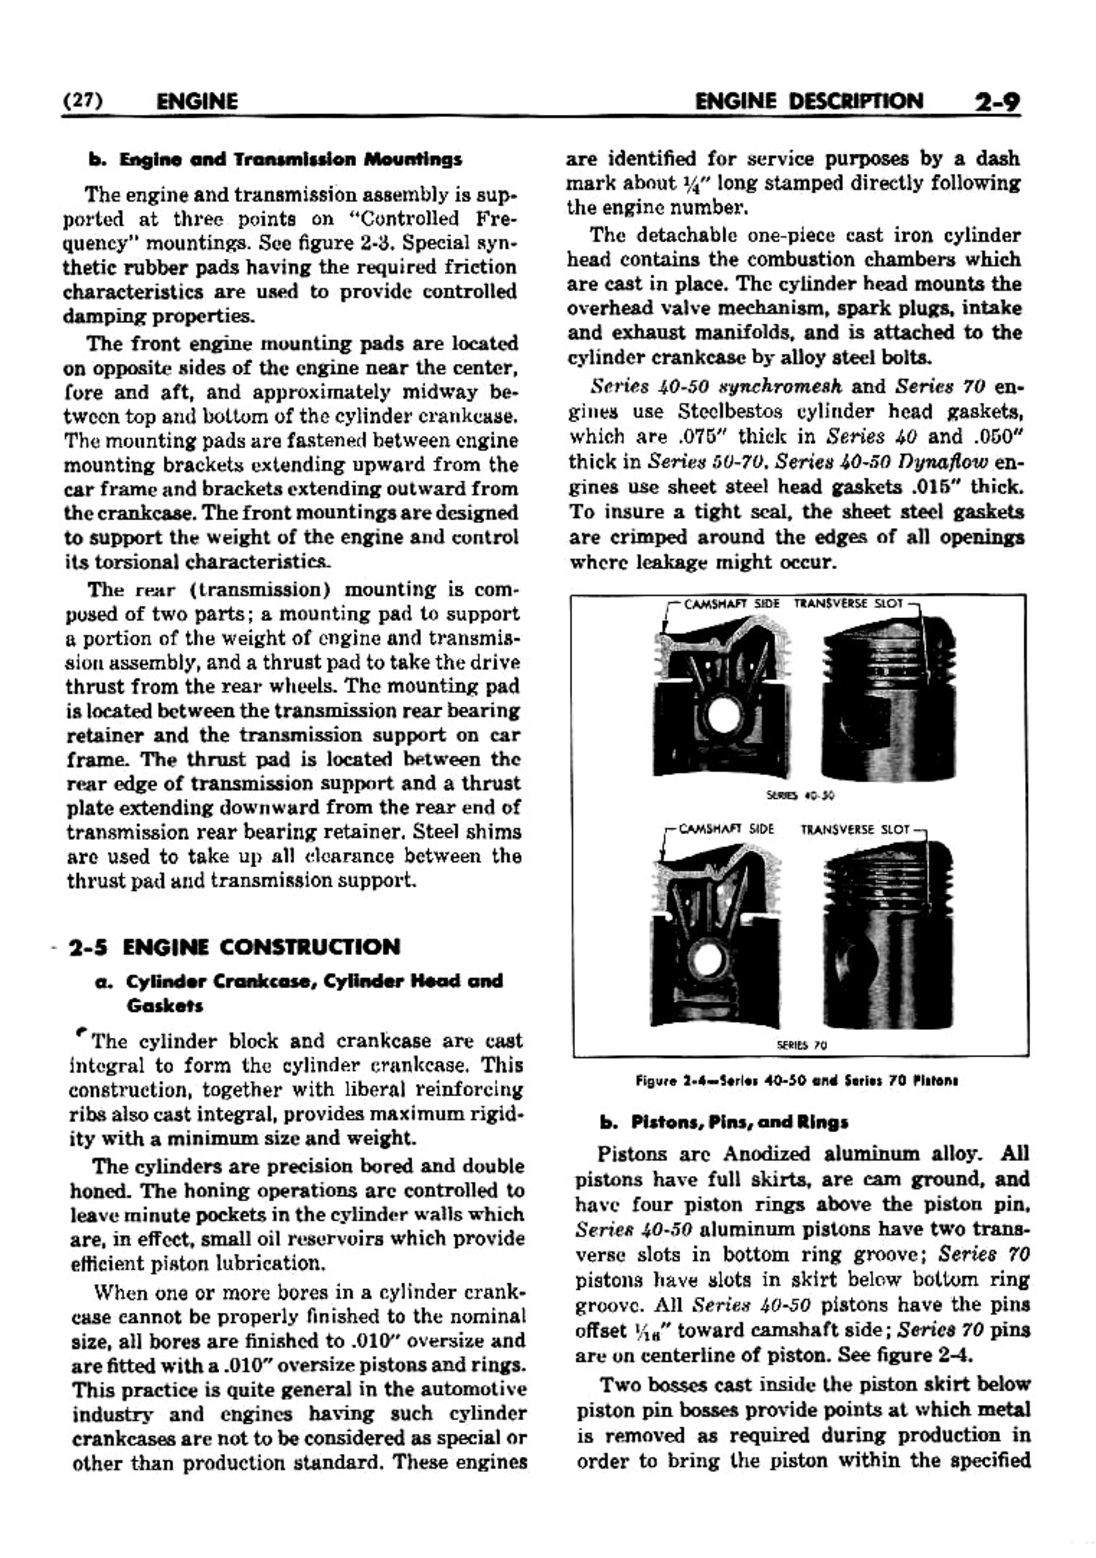 n_03 1952 Buick Shop Manual - Engine-009-009.jpg